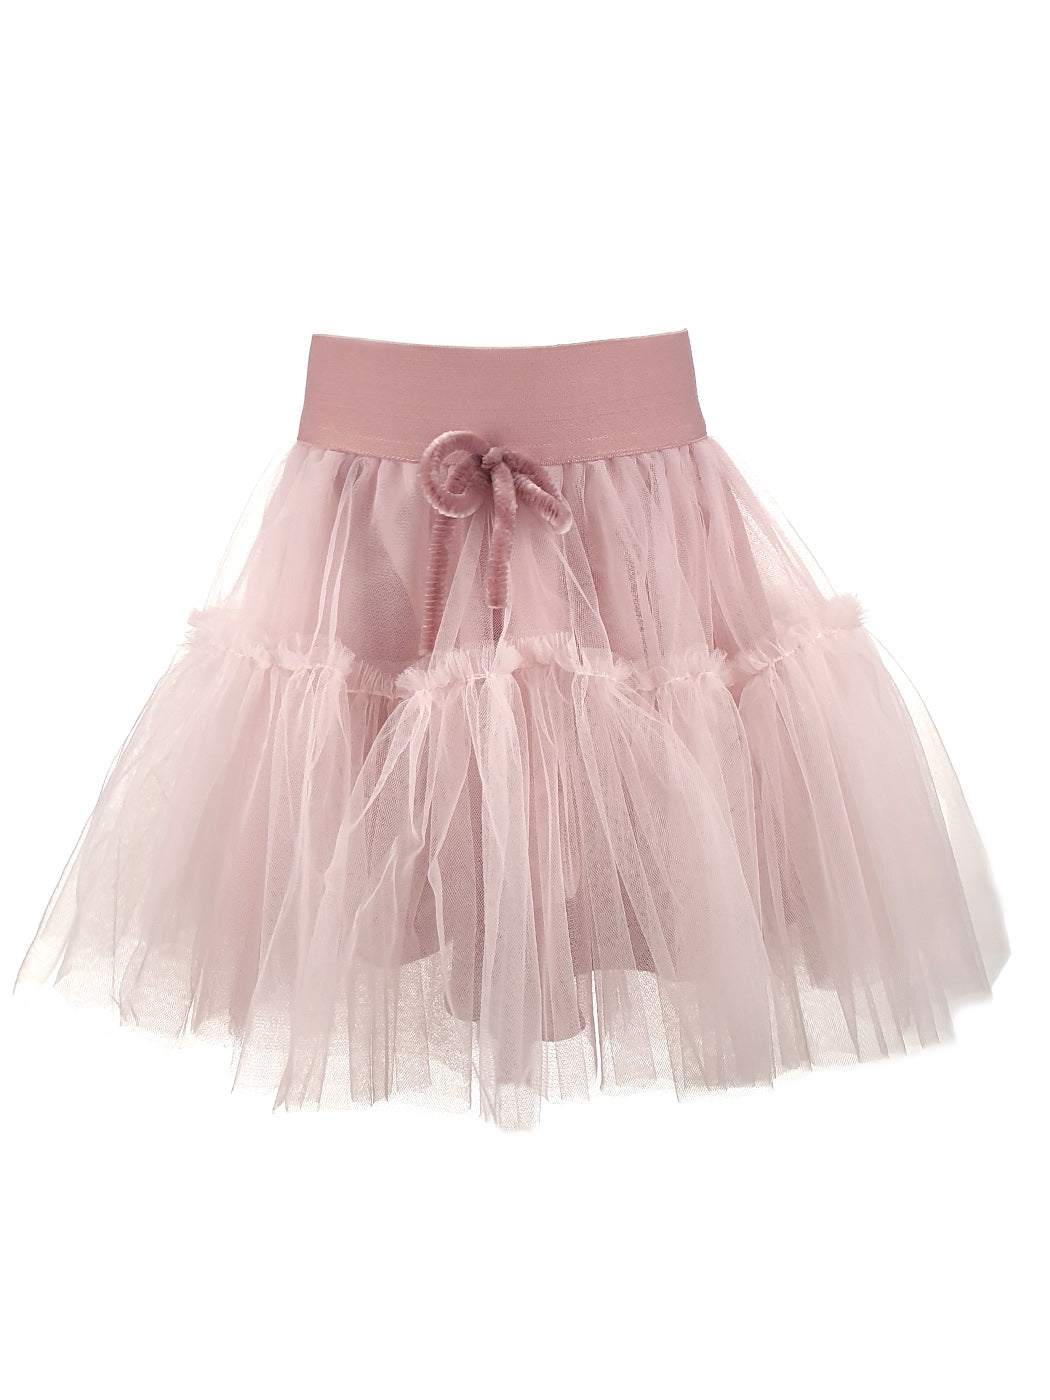 Pink Tutu tulle skirt with ruffles - BROOKE